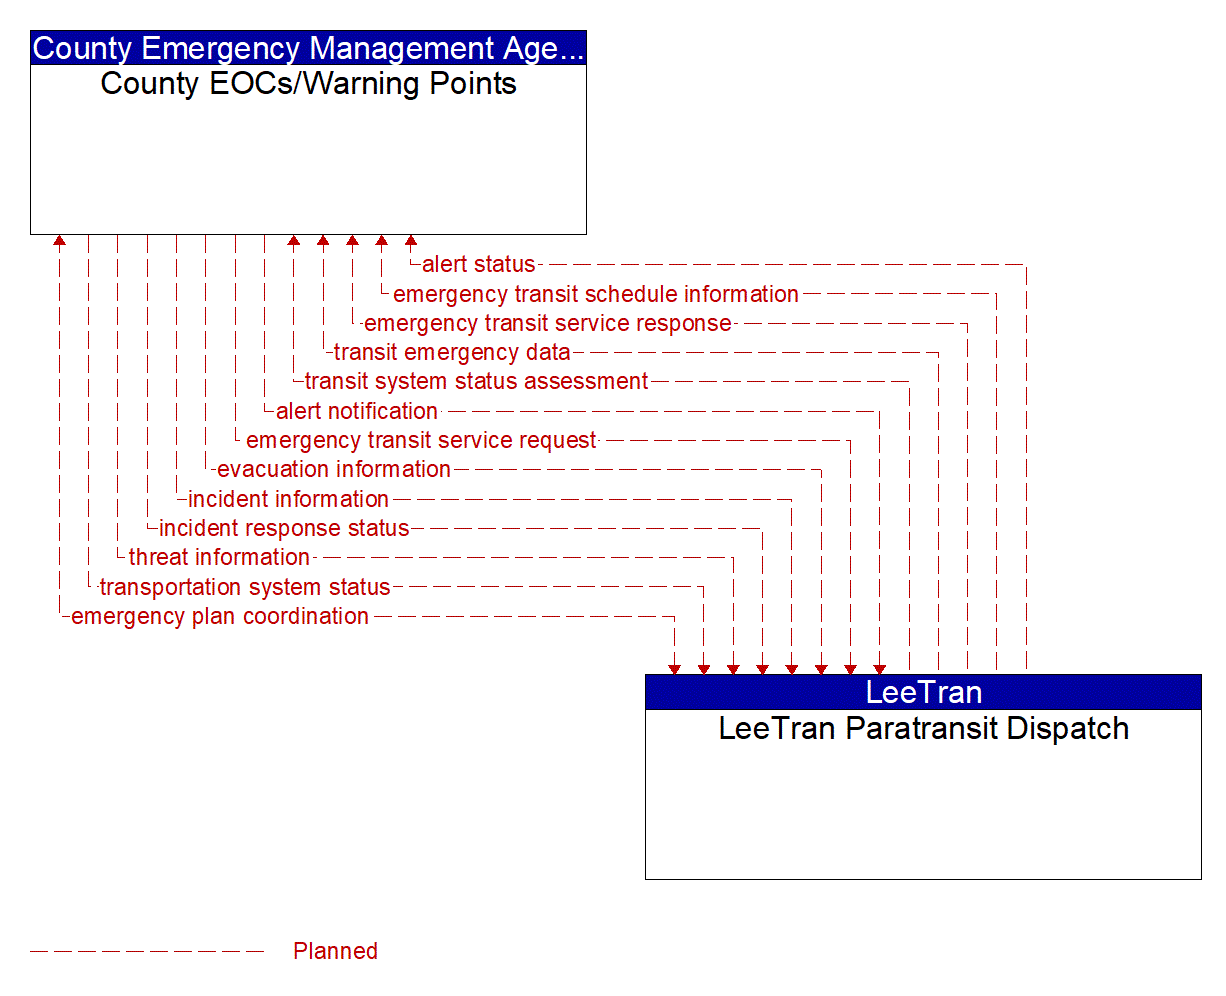 Architecture Flow Diagram: LeeTran Paratransit Dispatch <--> County EOCs/Warning Points